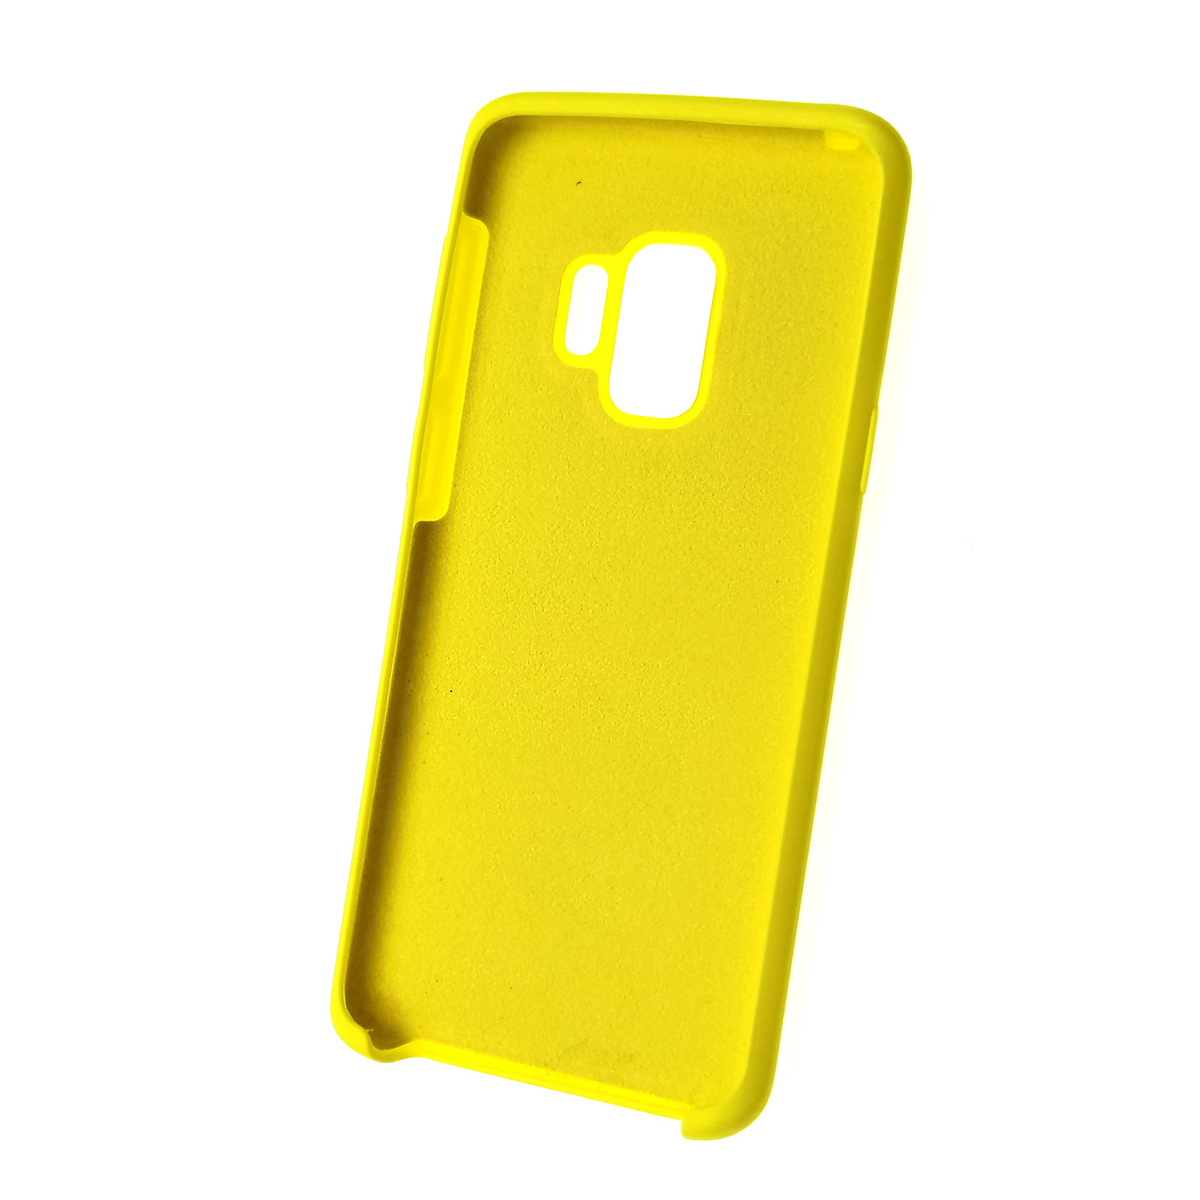 Чехол накладка Silicon Cover для SAMSUNG Galaxy S9 (SM-G960), силикон, бархат, цвет ярко желтый.